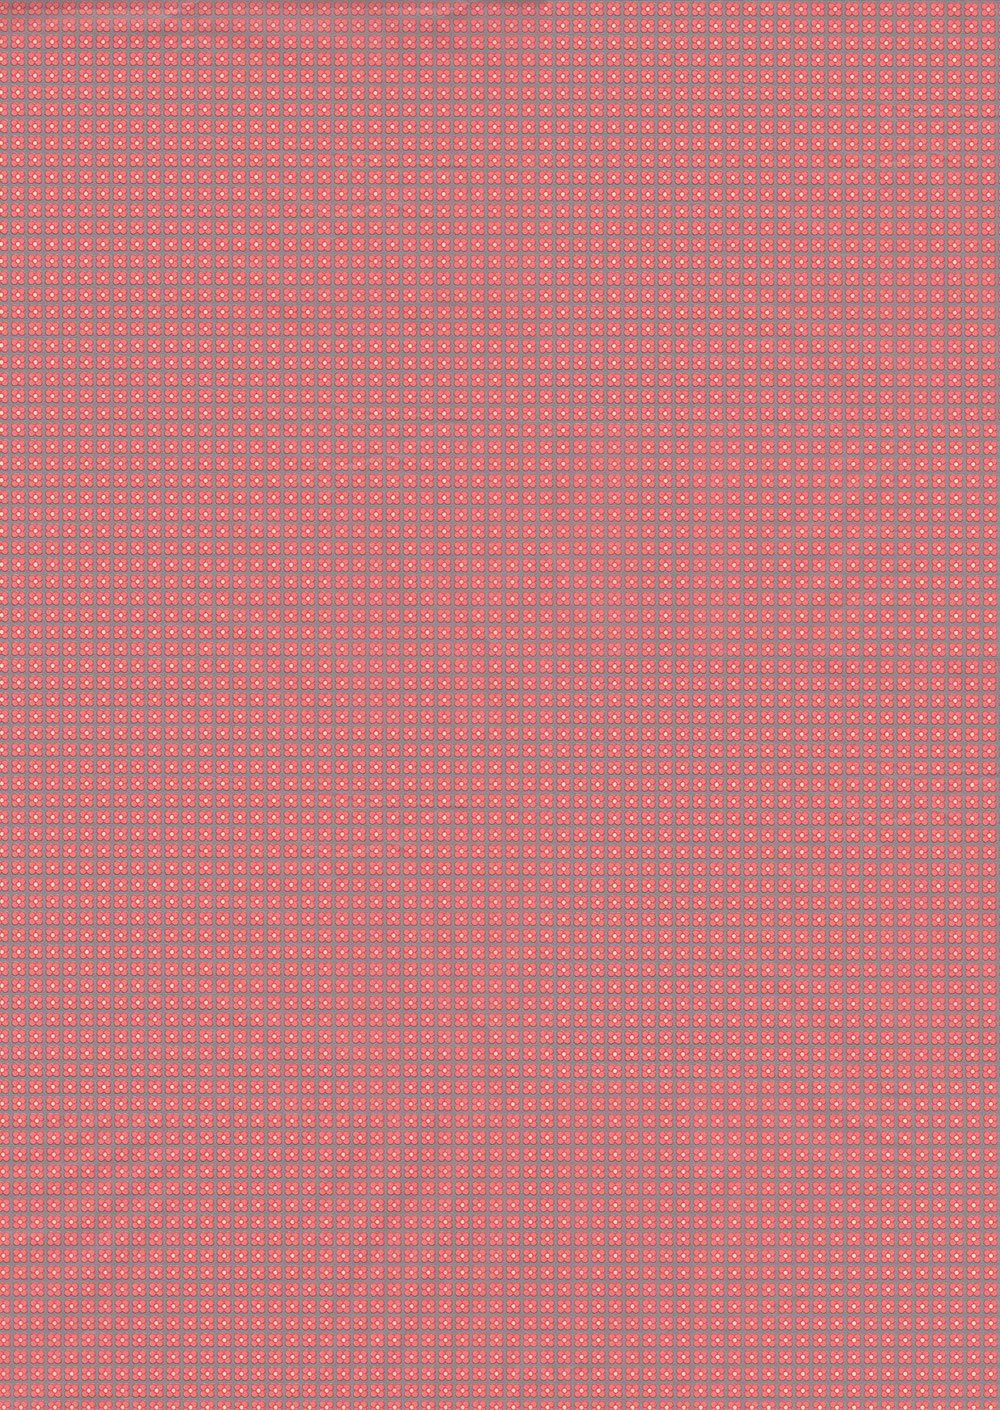 H-Erzmade rosa/grau, Blümchen Zeichenpapier 647 klein 30 Décopatch-Papier